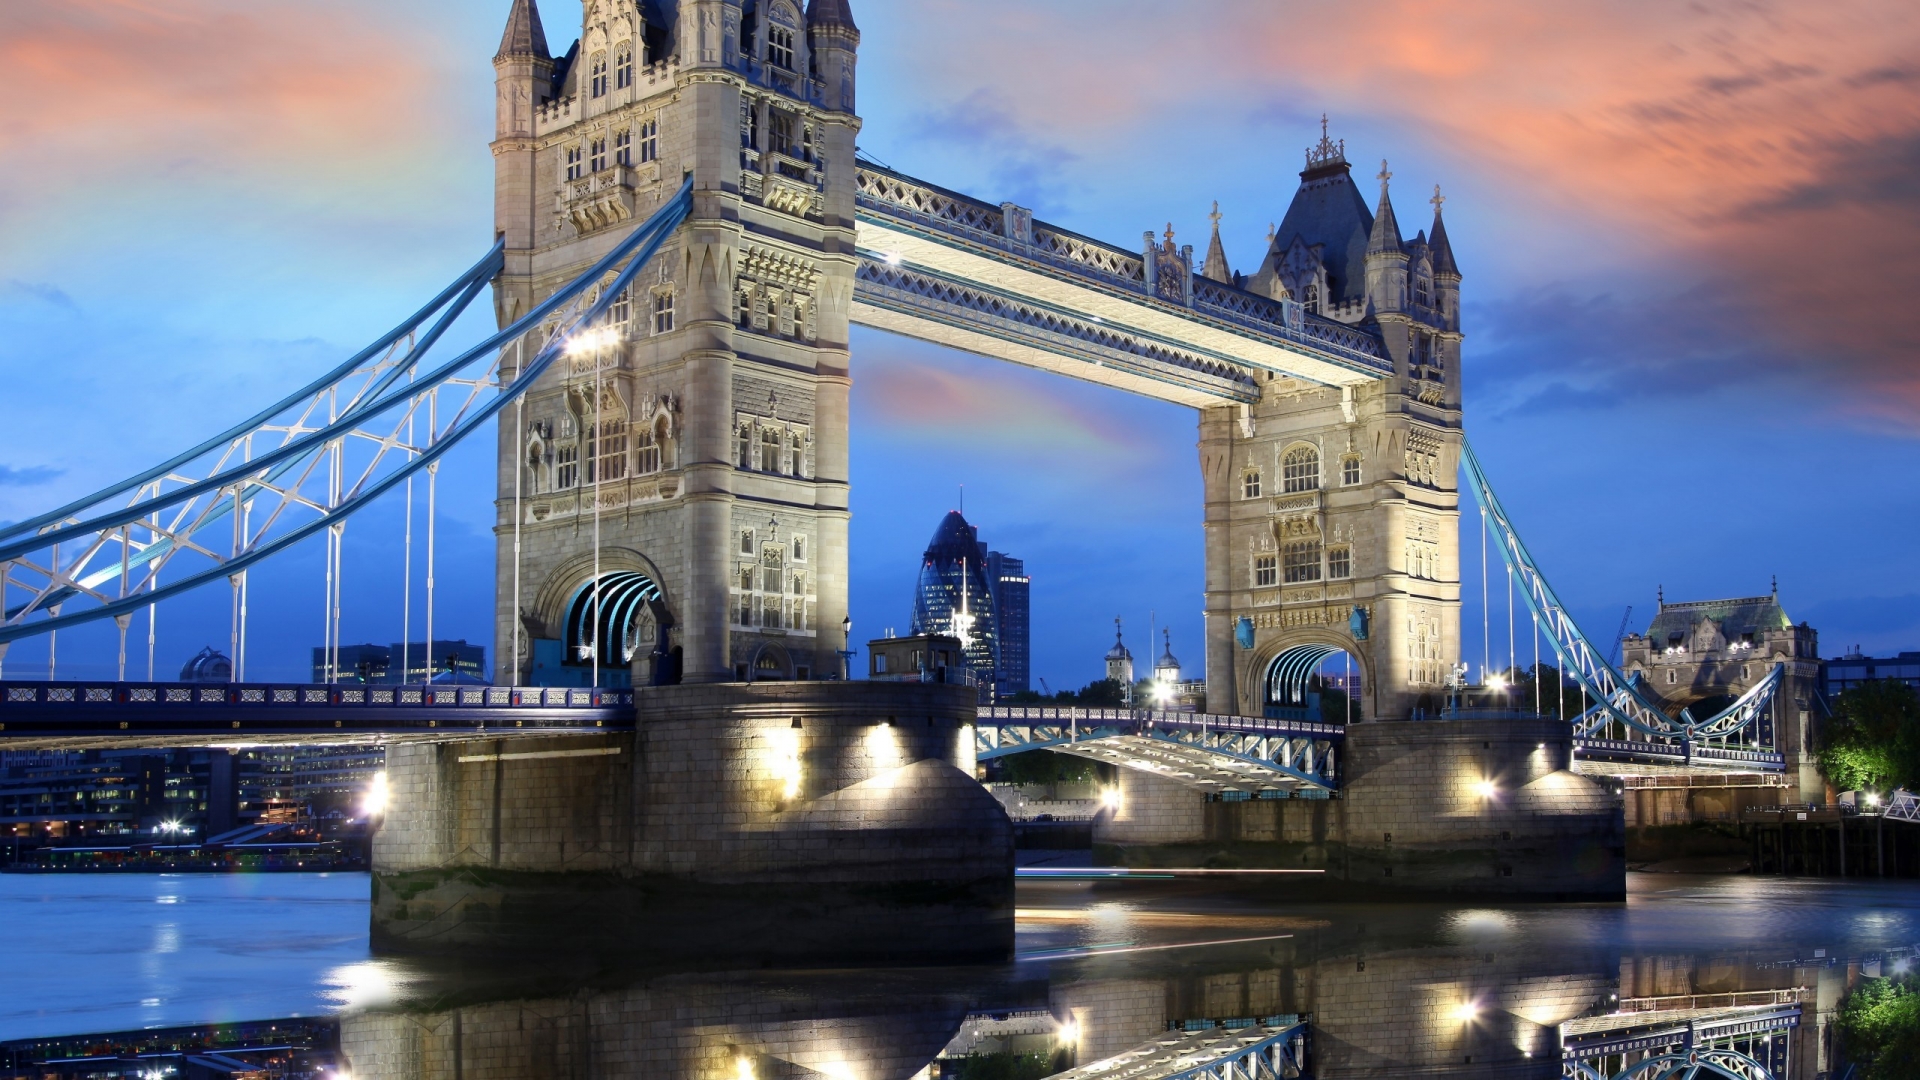 Night Over Tower Bridge for 1920 x 1080 HDTV 1080p resolution